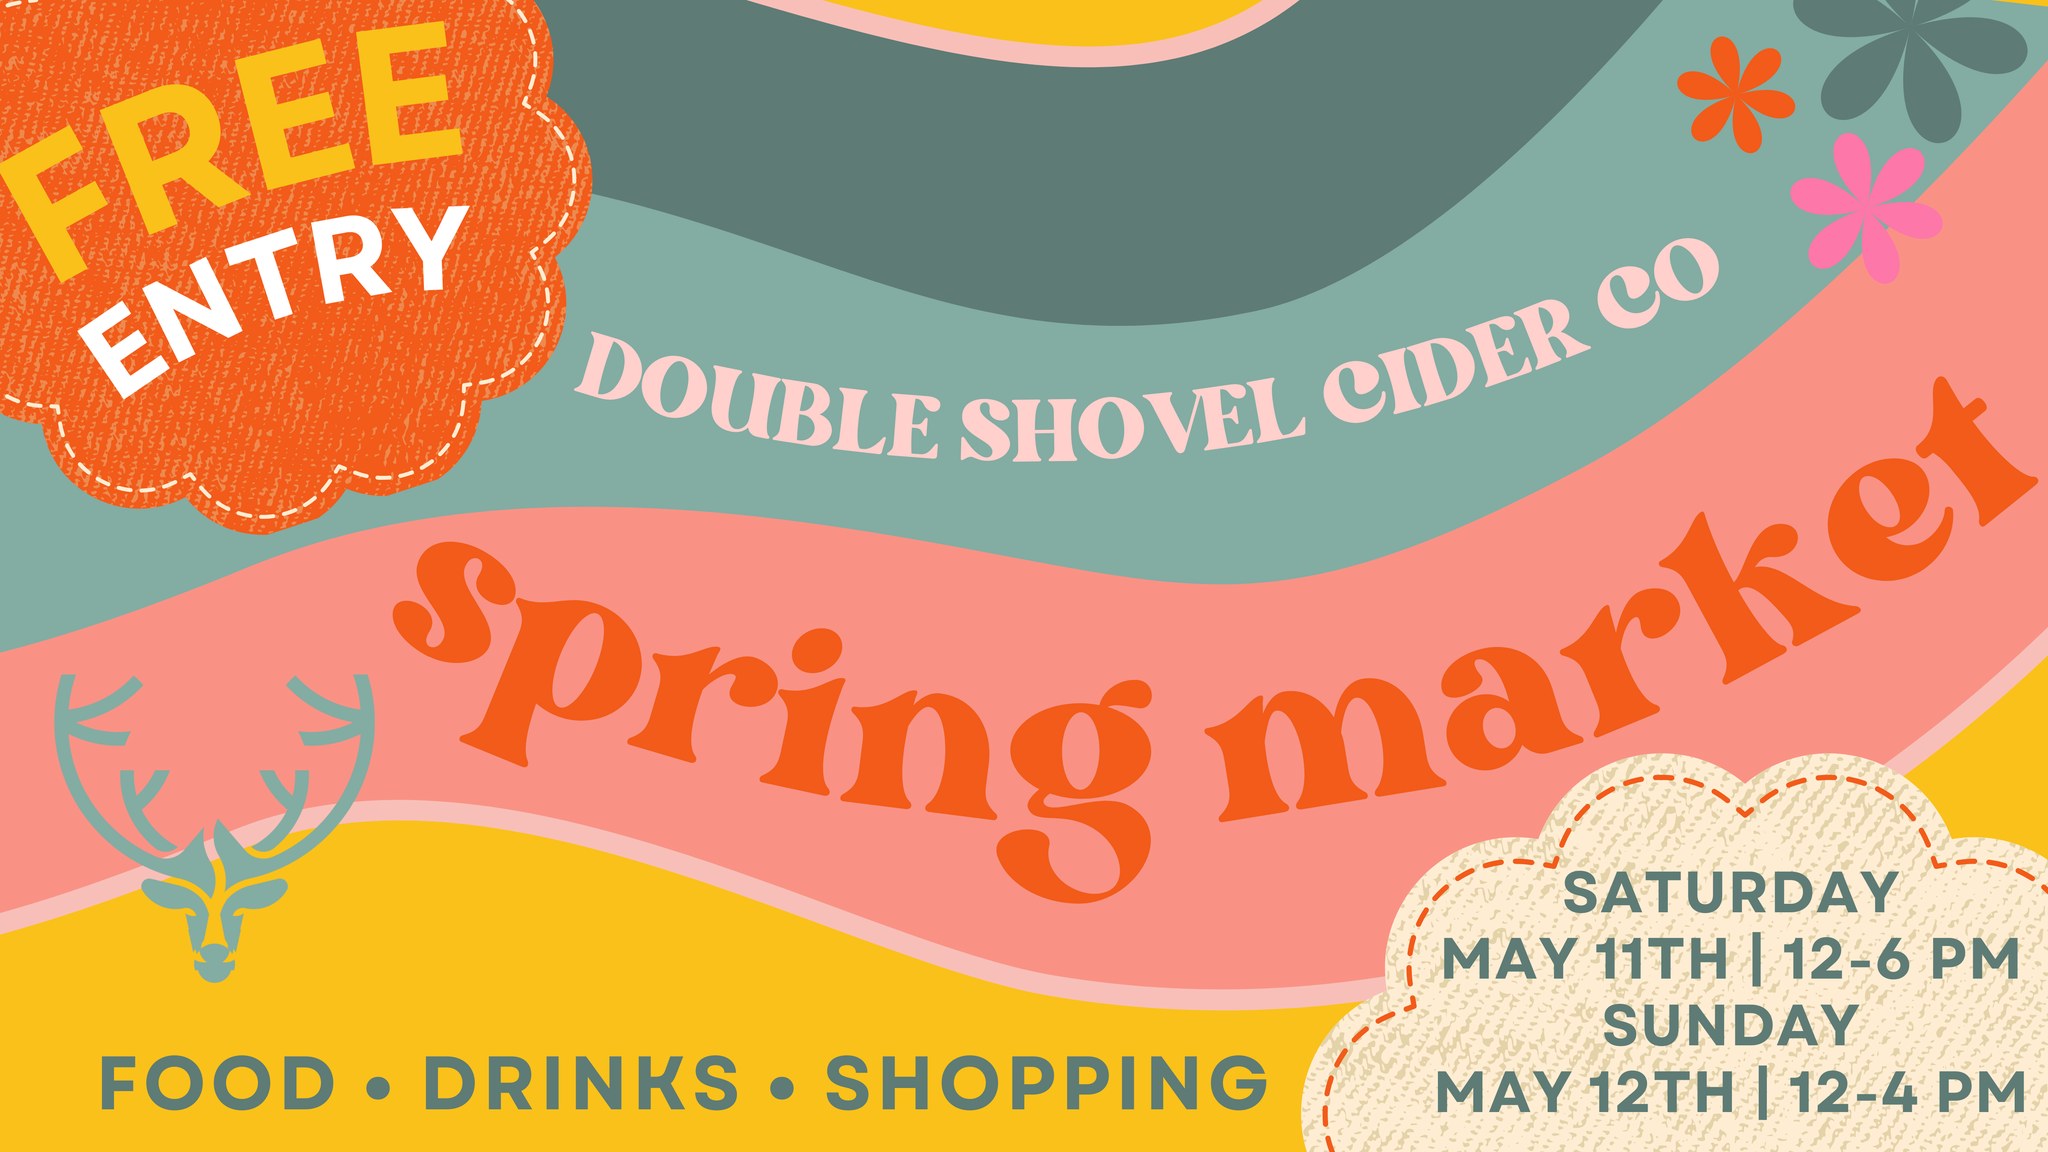 Double Shovel Cider Co - Spring Market - Saturday